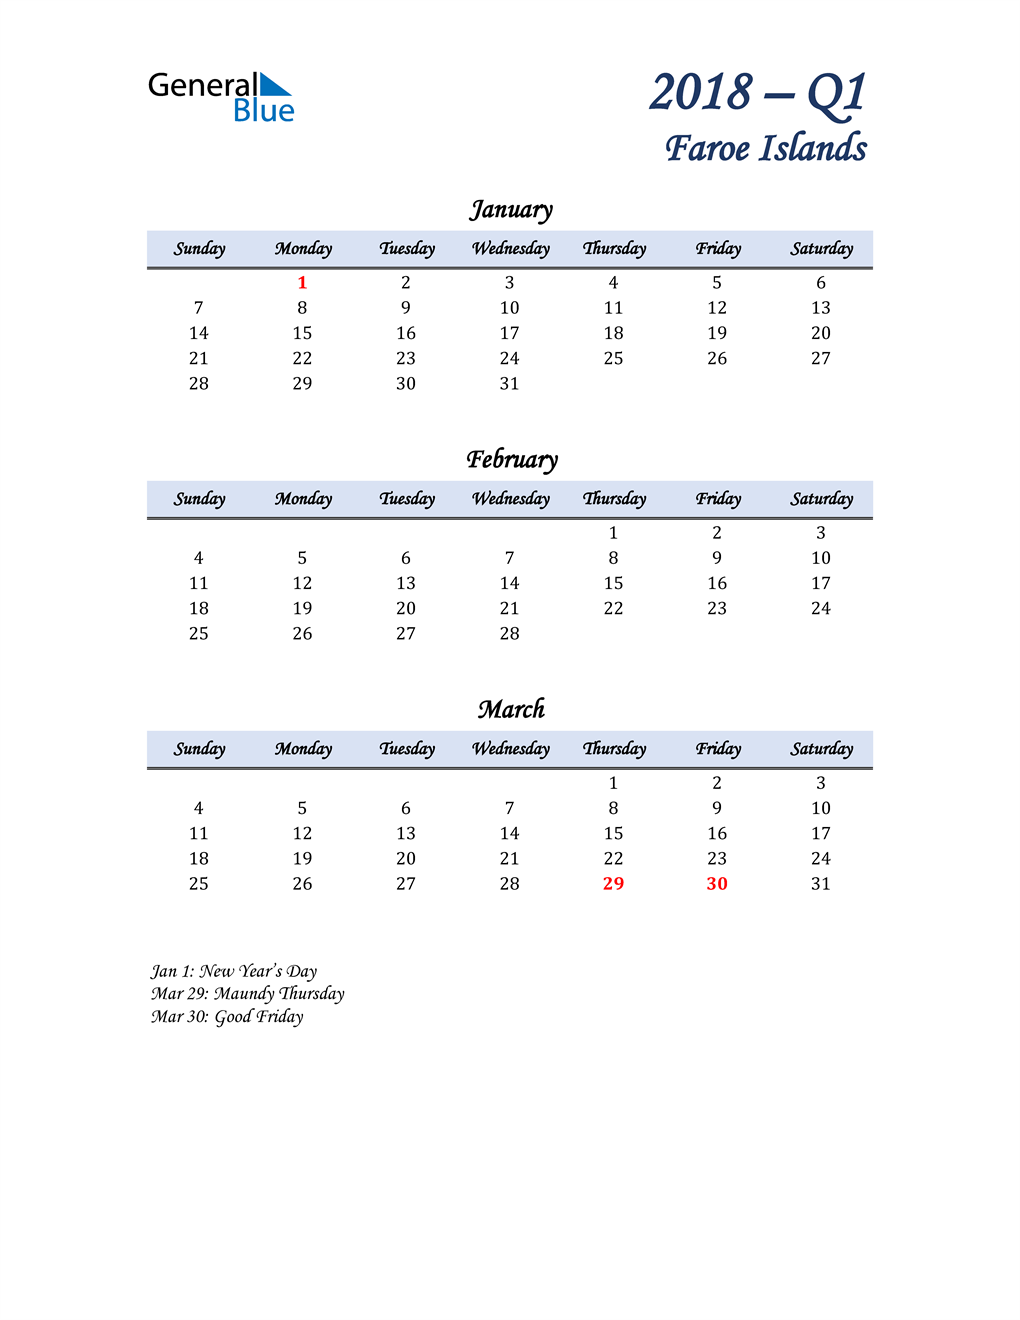  January, February, and March Calendar for Faroe Islands